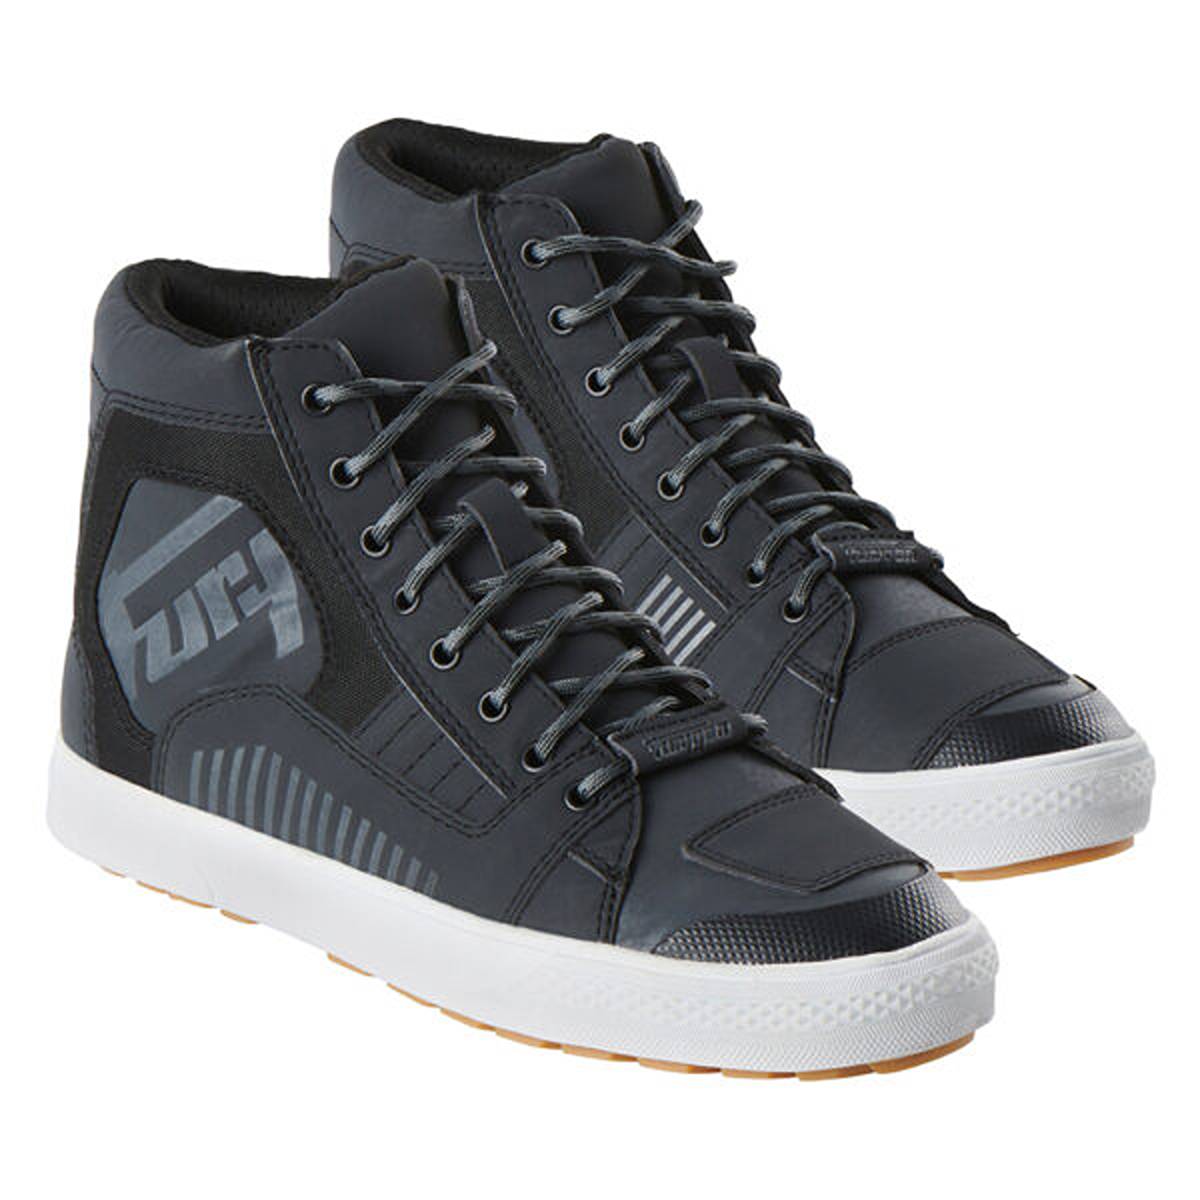 Image of Furygan Sacramento D30 Shoes Black Size 46 ID 3435980368319